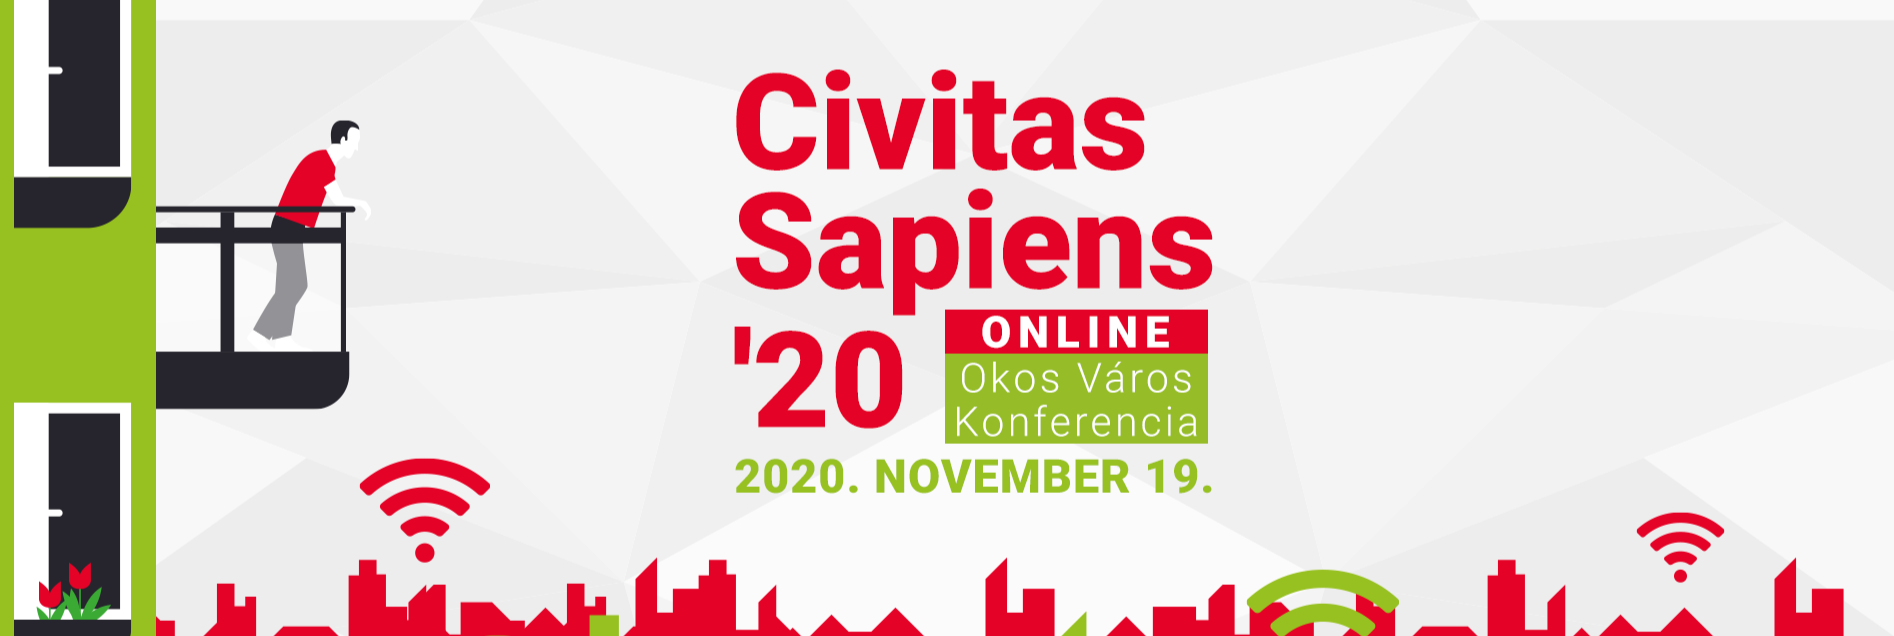 Civitas Sapiens ’20